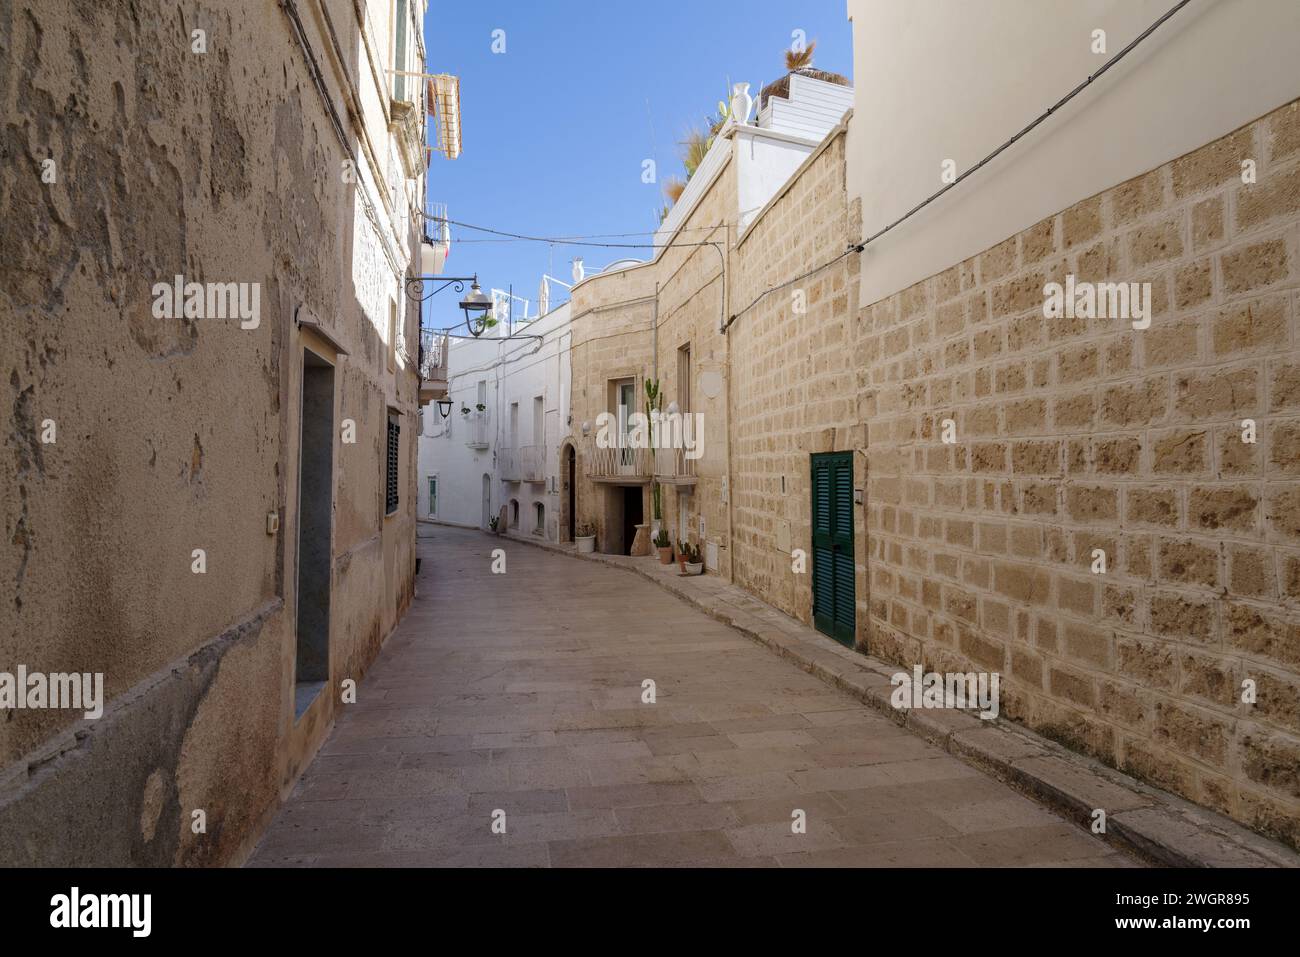 View of street in Monopoli old town, Apulia region, Italy Stock Photo